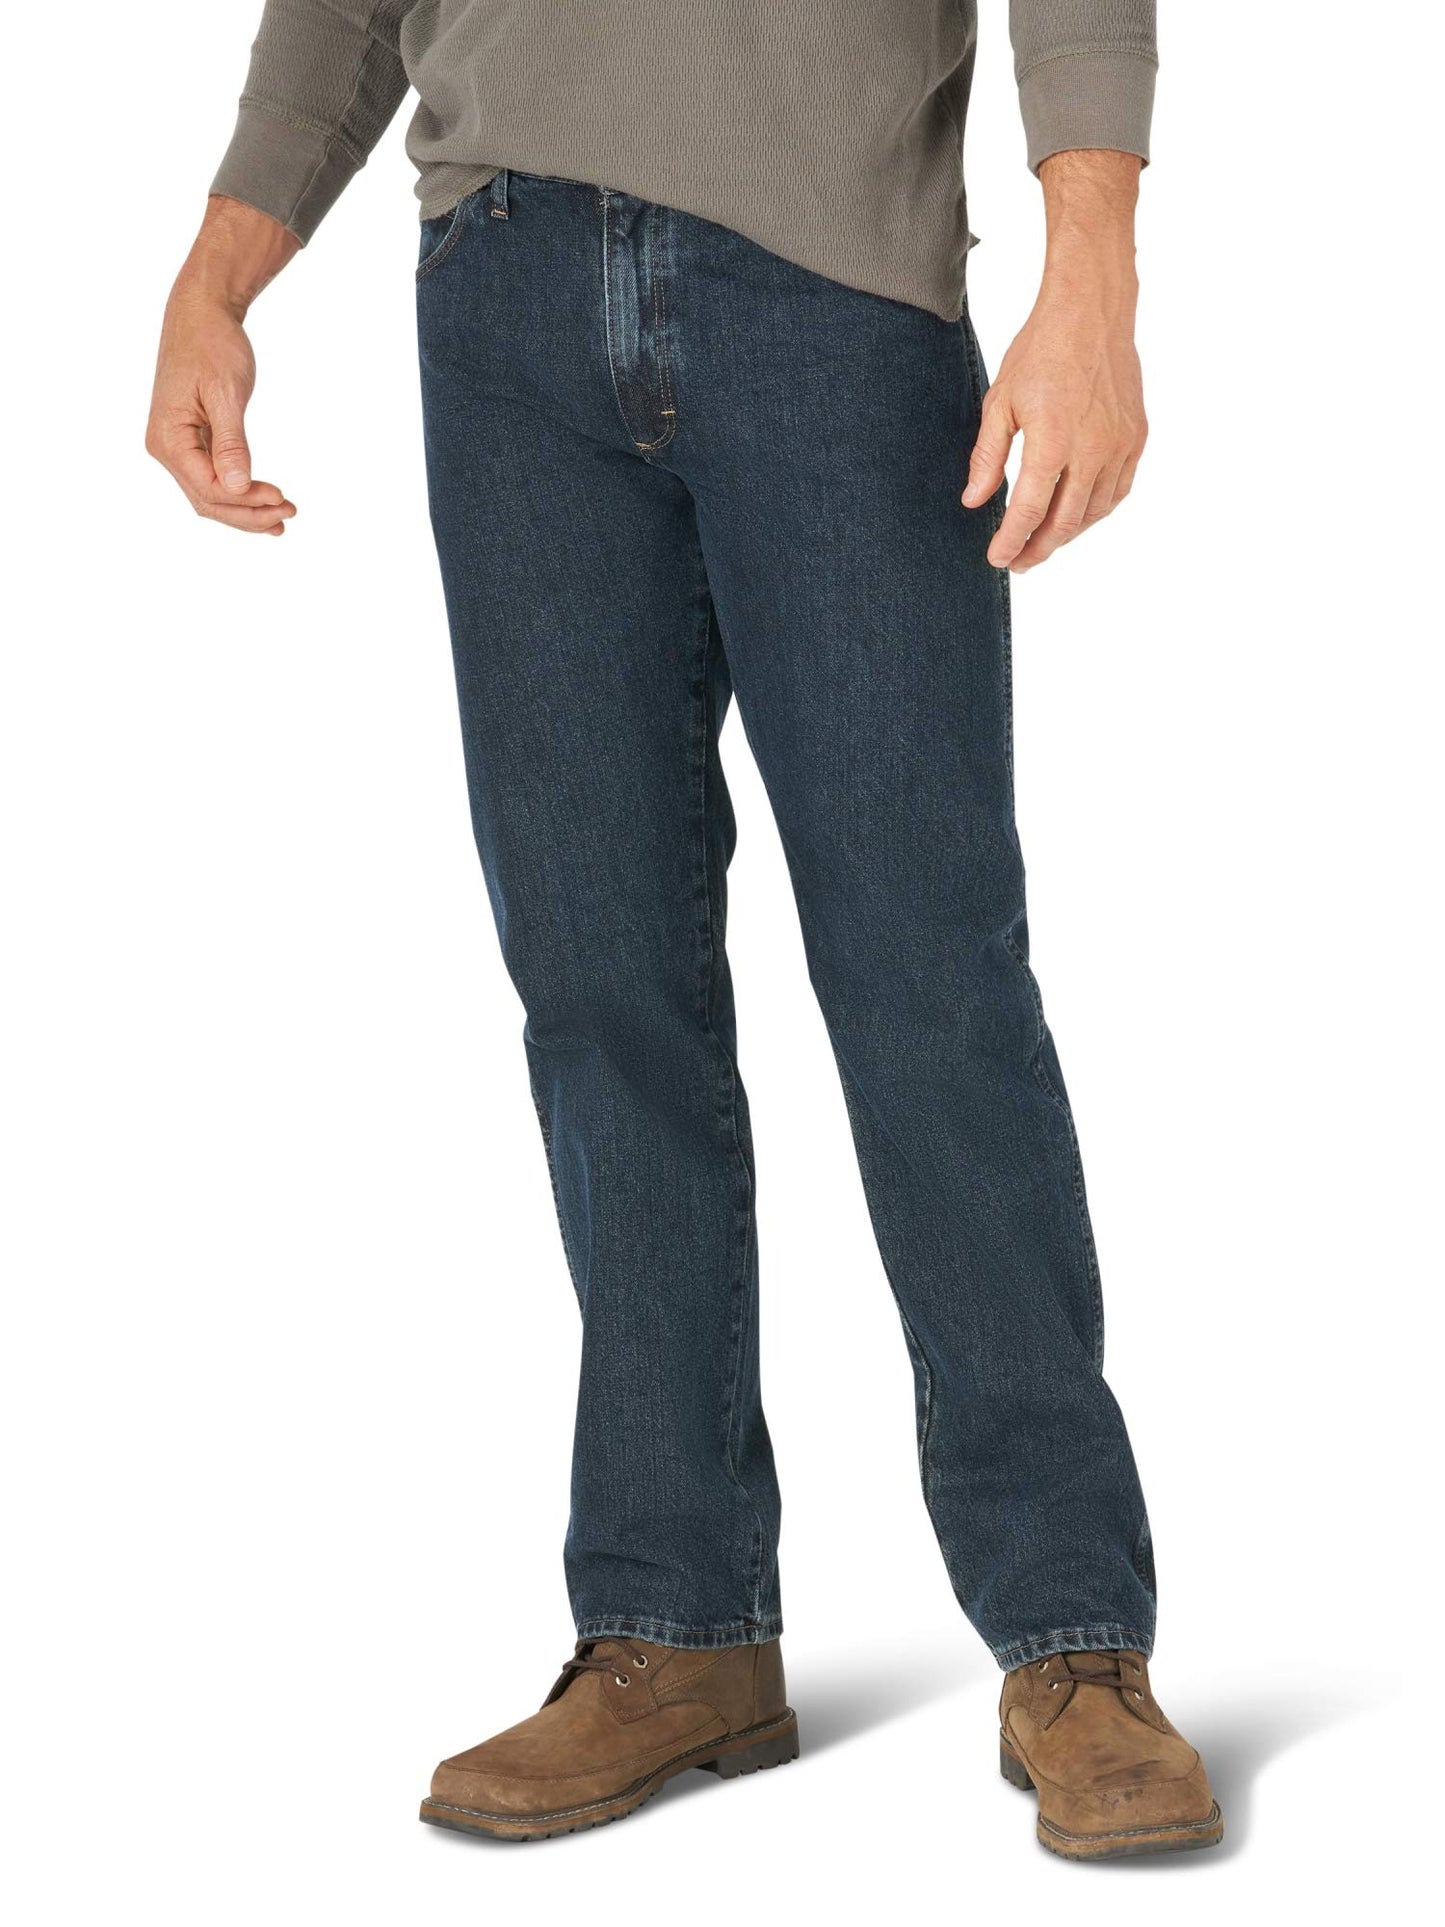 Wrangler Authentics Men's Classic 5-Pocket Regular Fit Cotton Jean, Storm, 28W x 30L